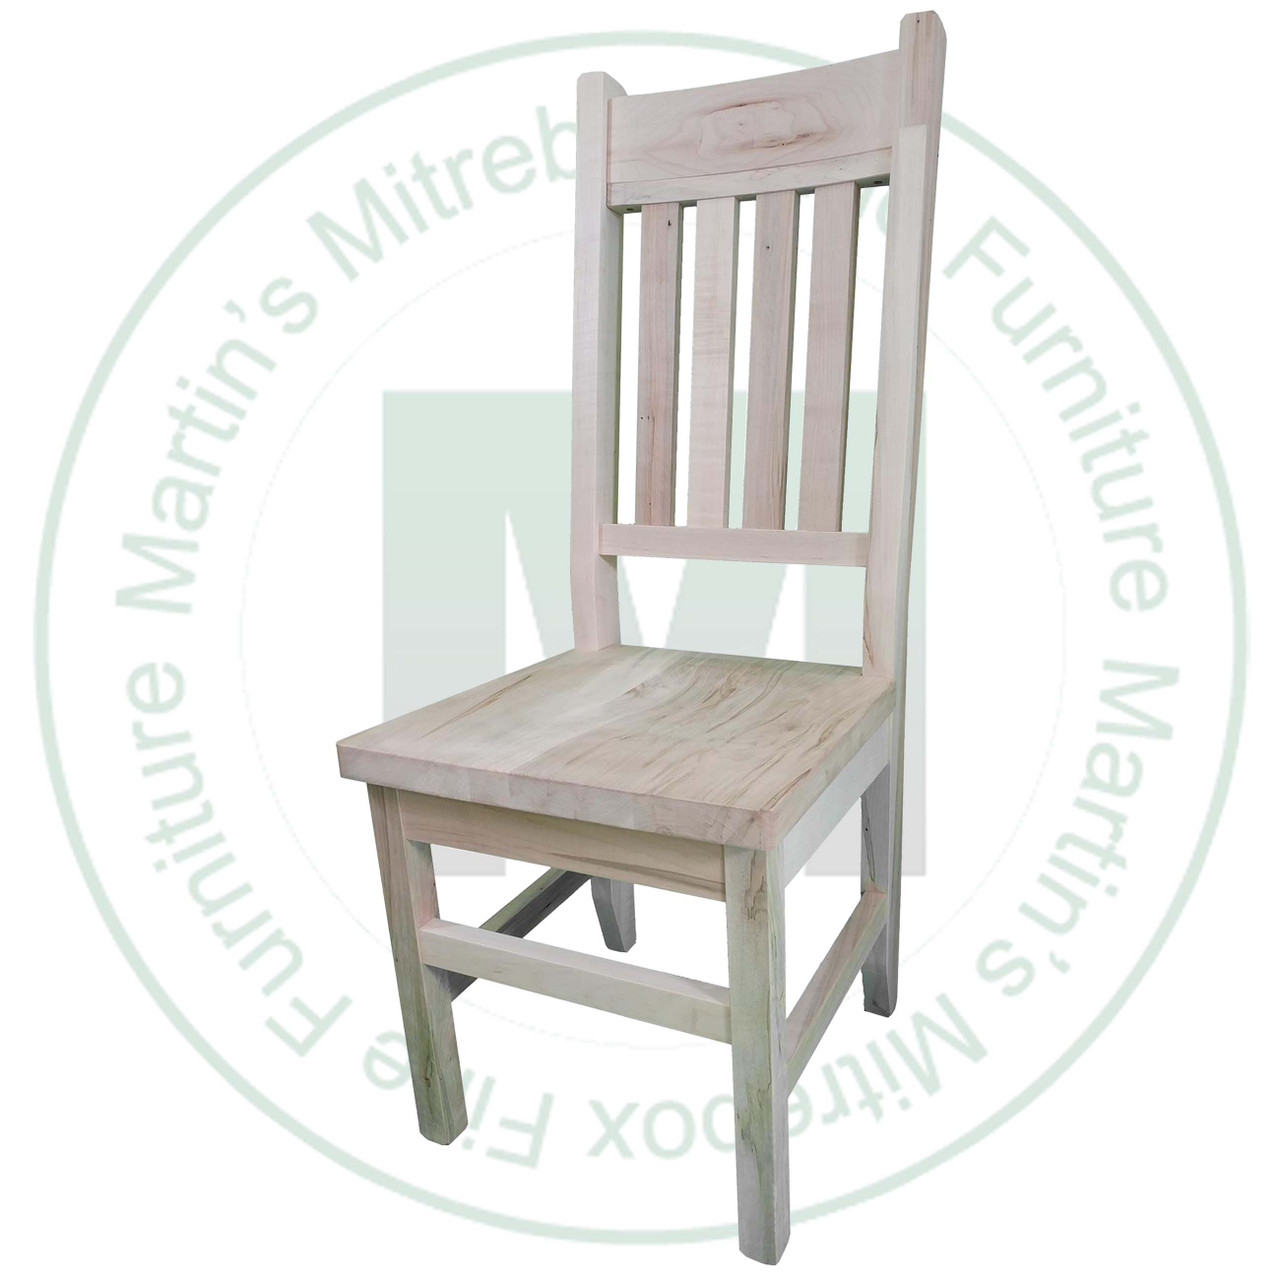 Maple Small Yukon Side Chair Has Wood Seat